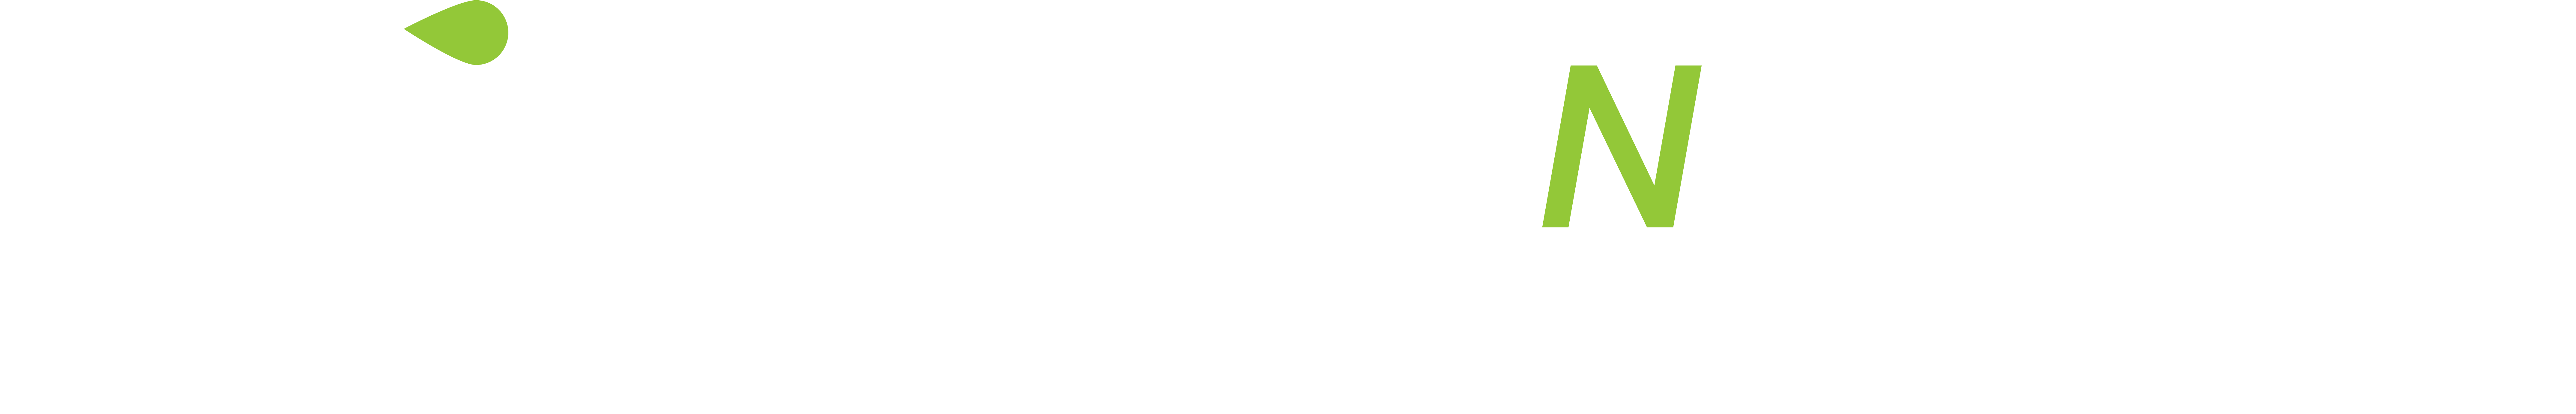 SpokesNMotion light Logo - Creating lifestyles